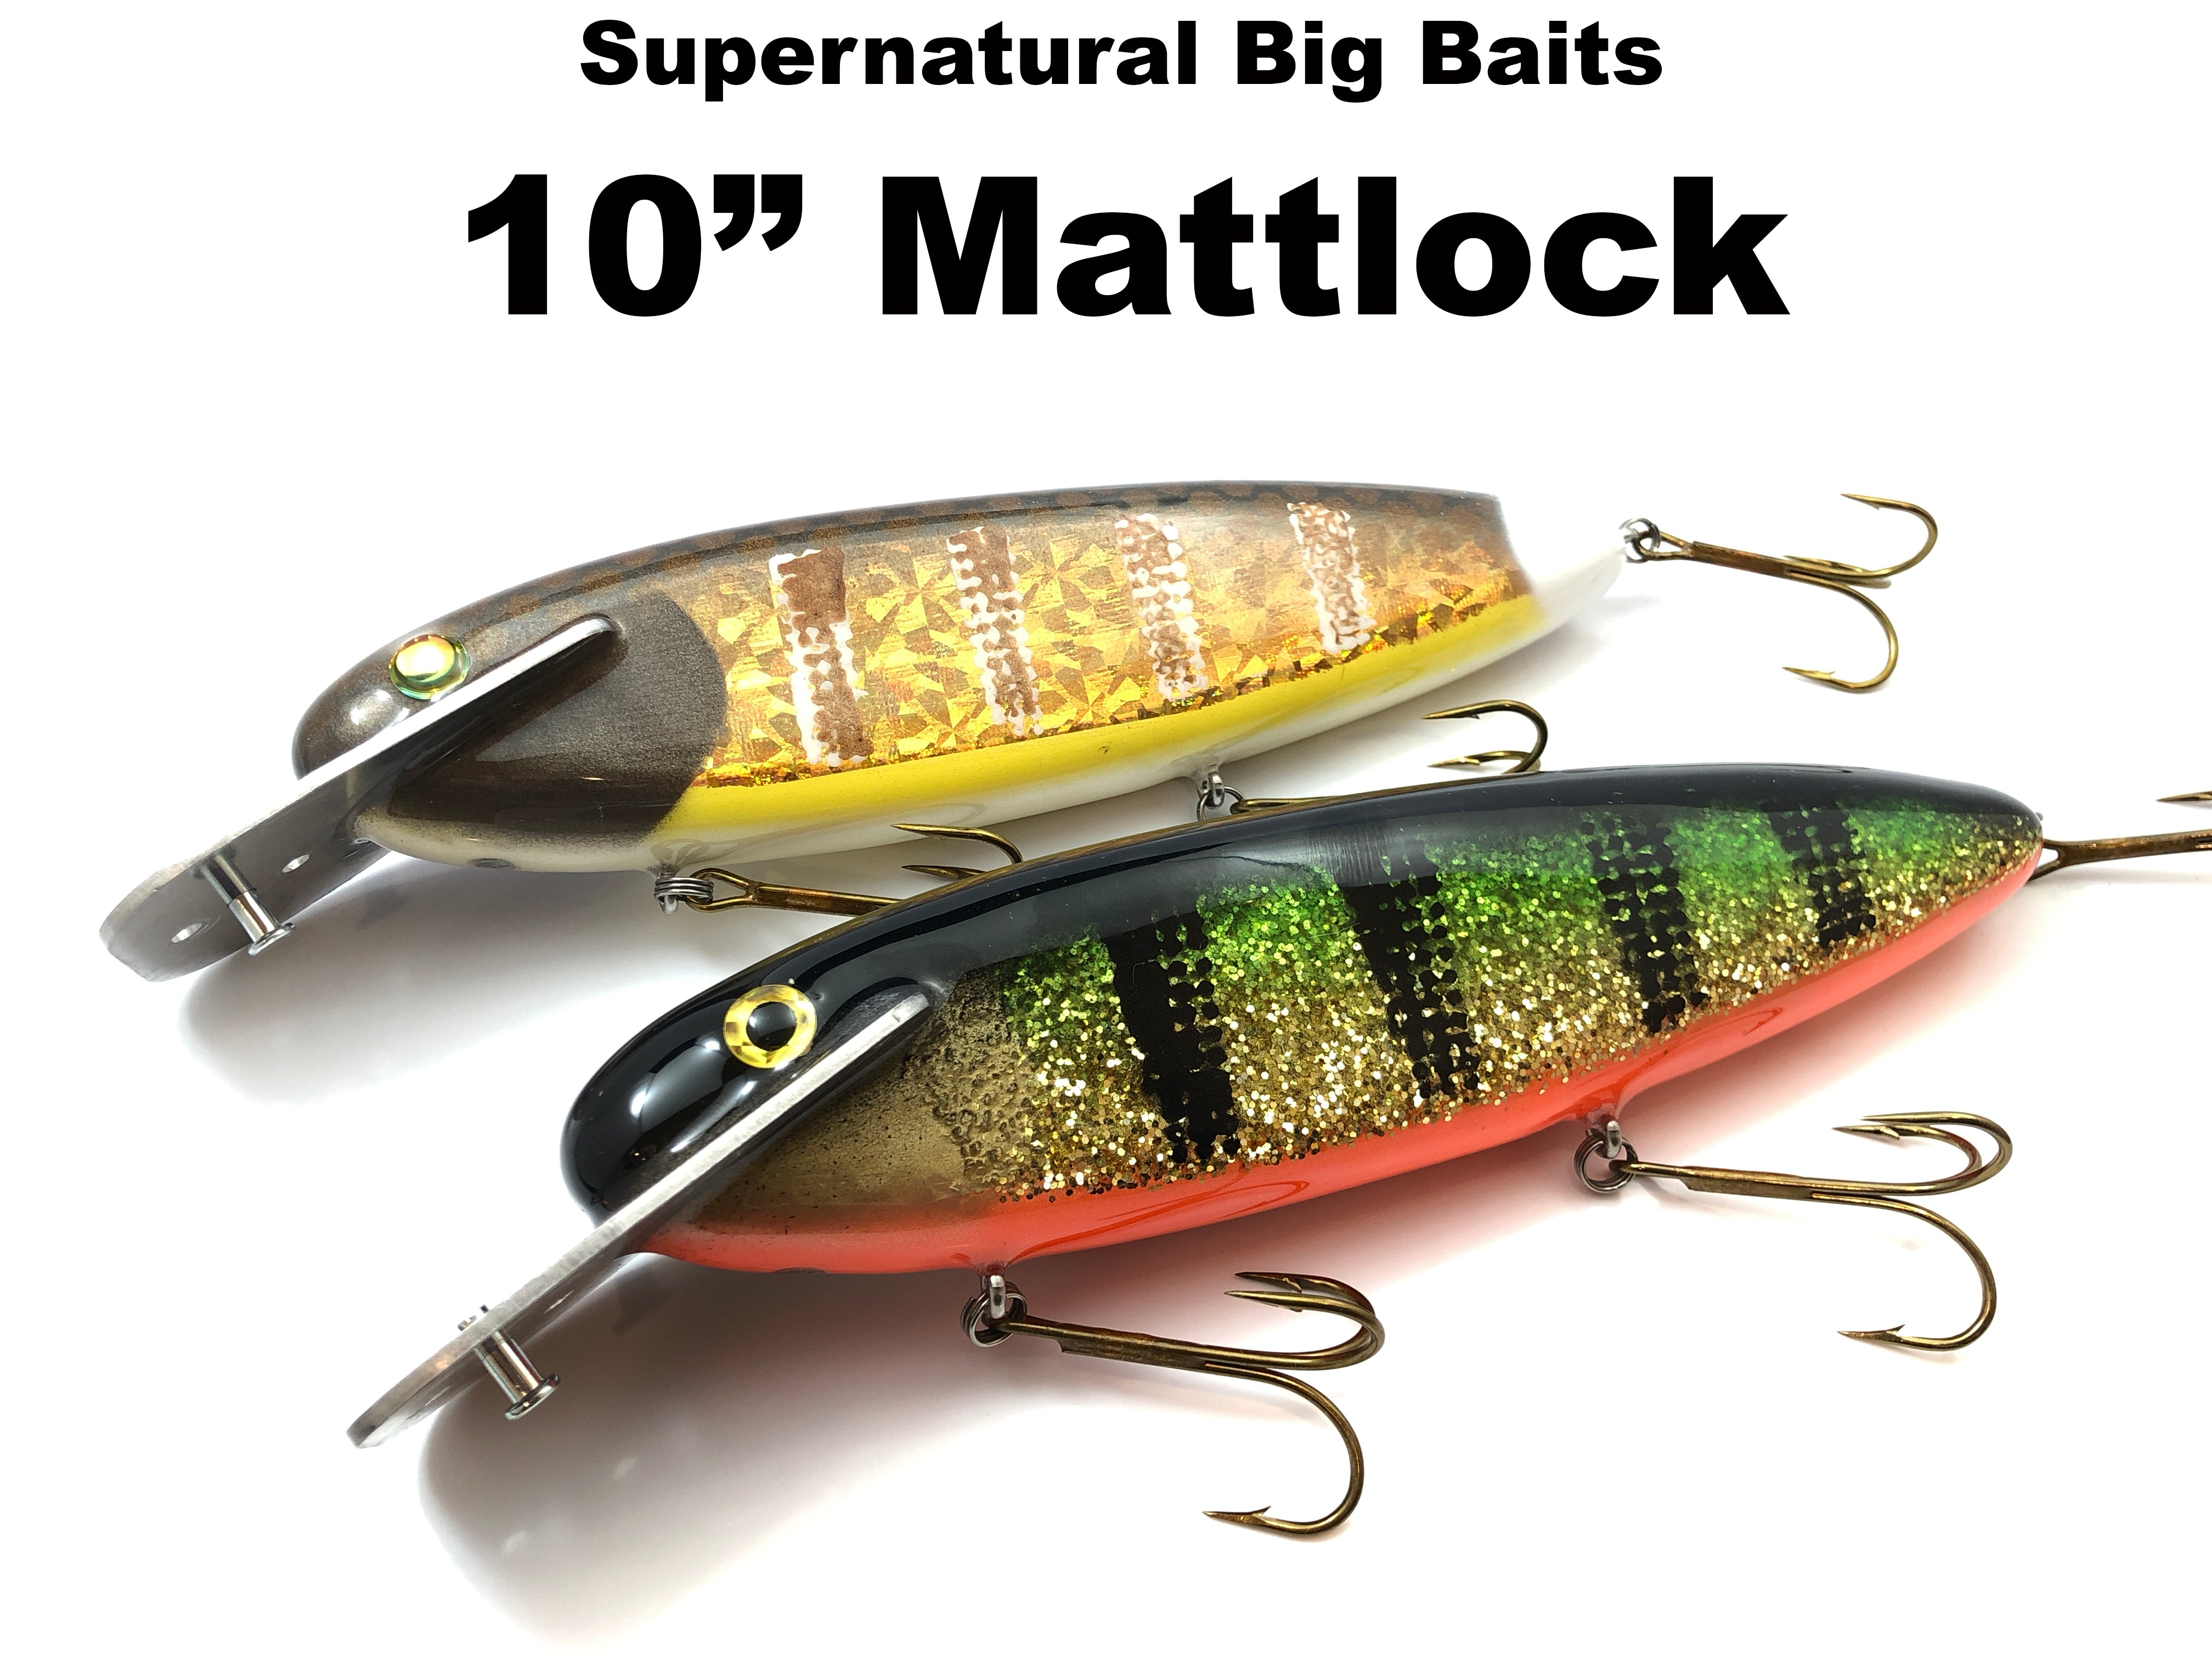 Supernatural Big Baits 10 Mattlock – Team Rhino Outdoors LLC